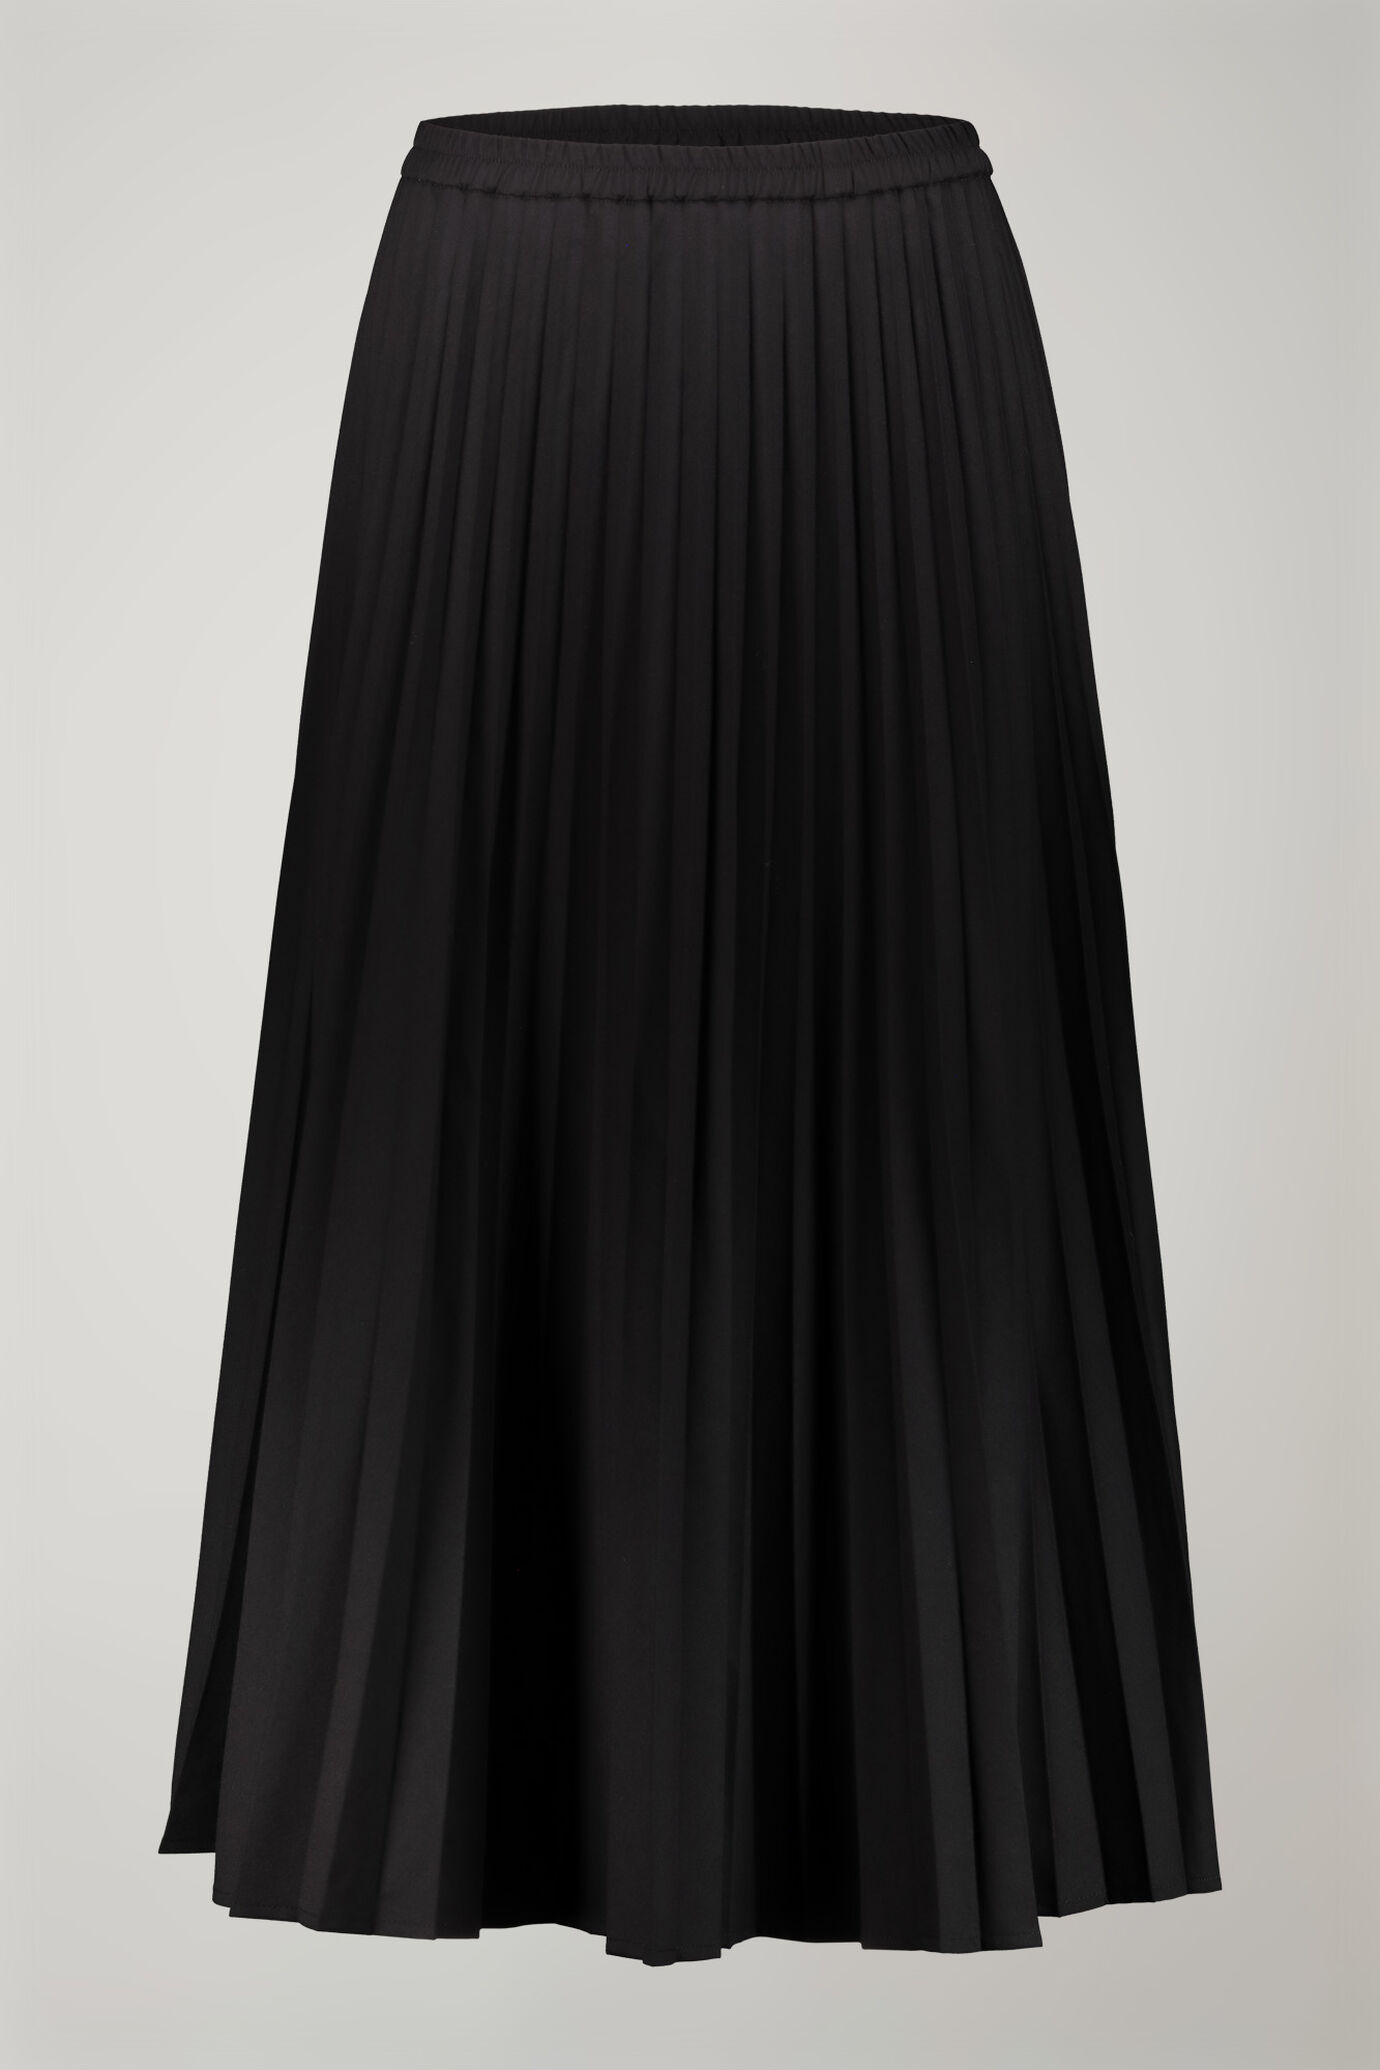 Women's long skirt plissè with elastic waistband